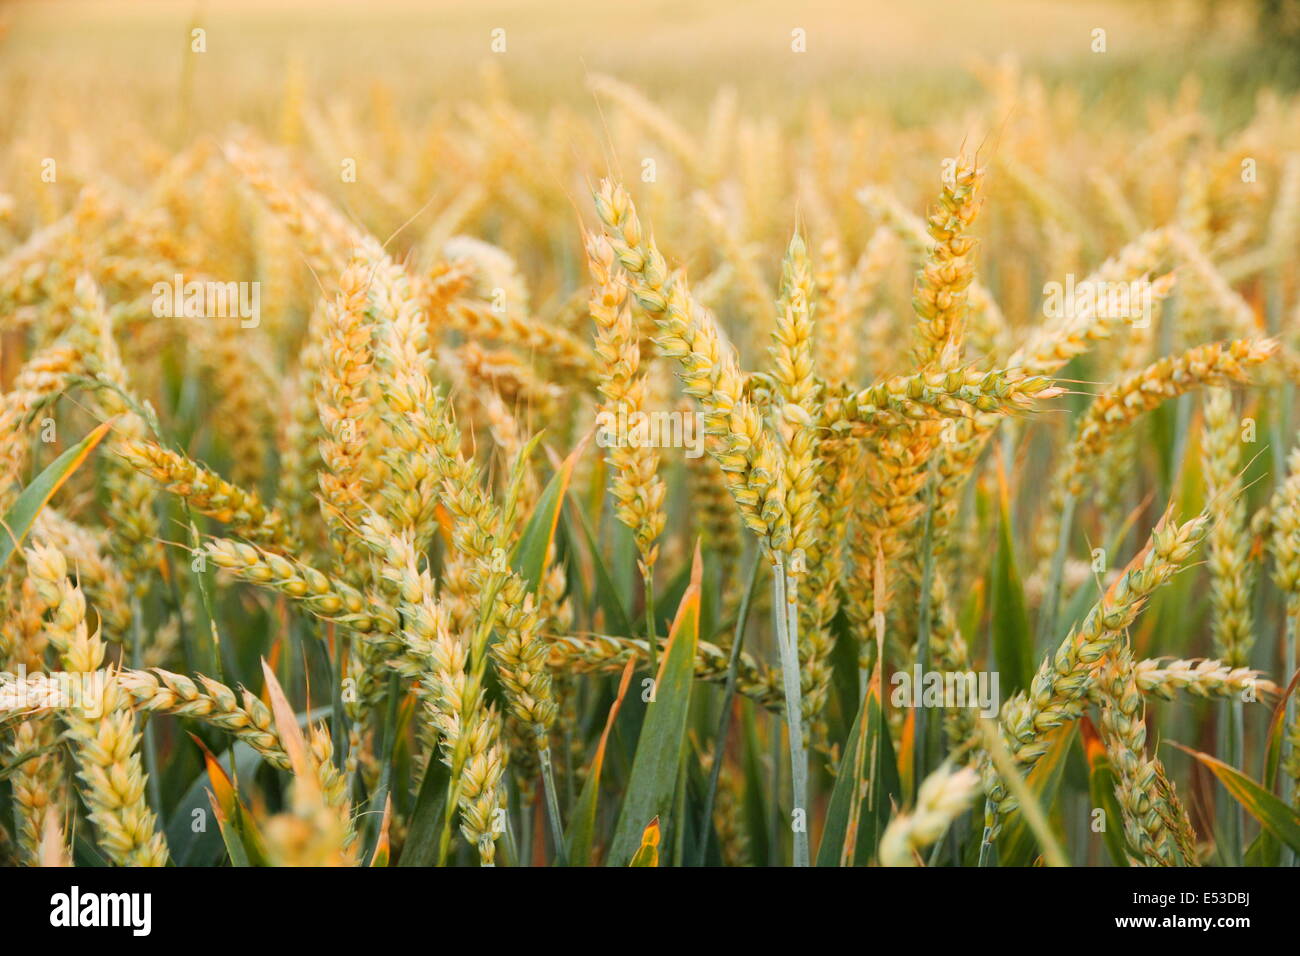 Ripe wheat ears on field as background, horizontal Stock Photo